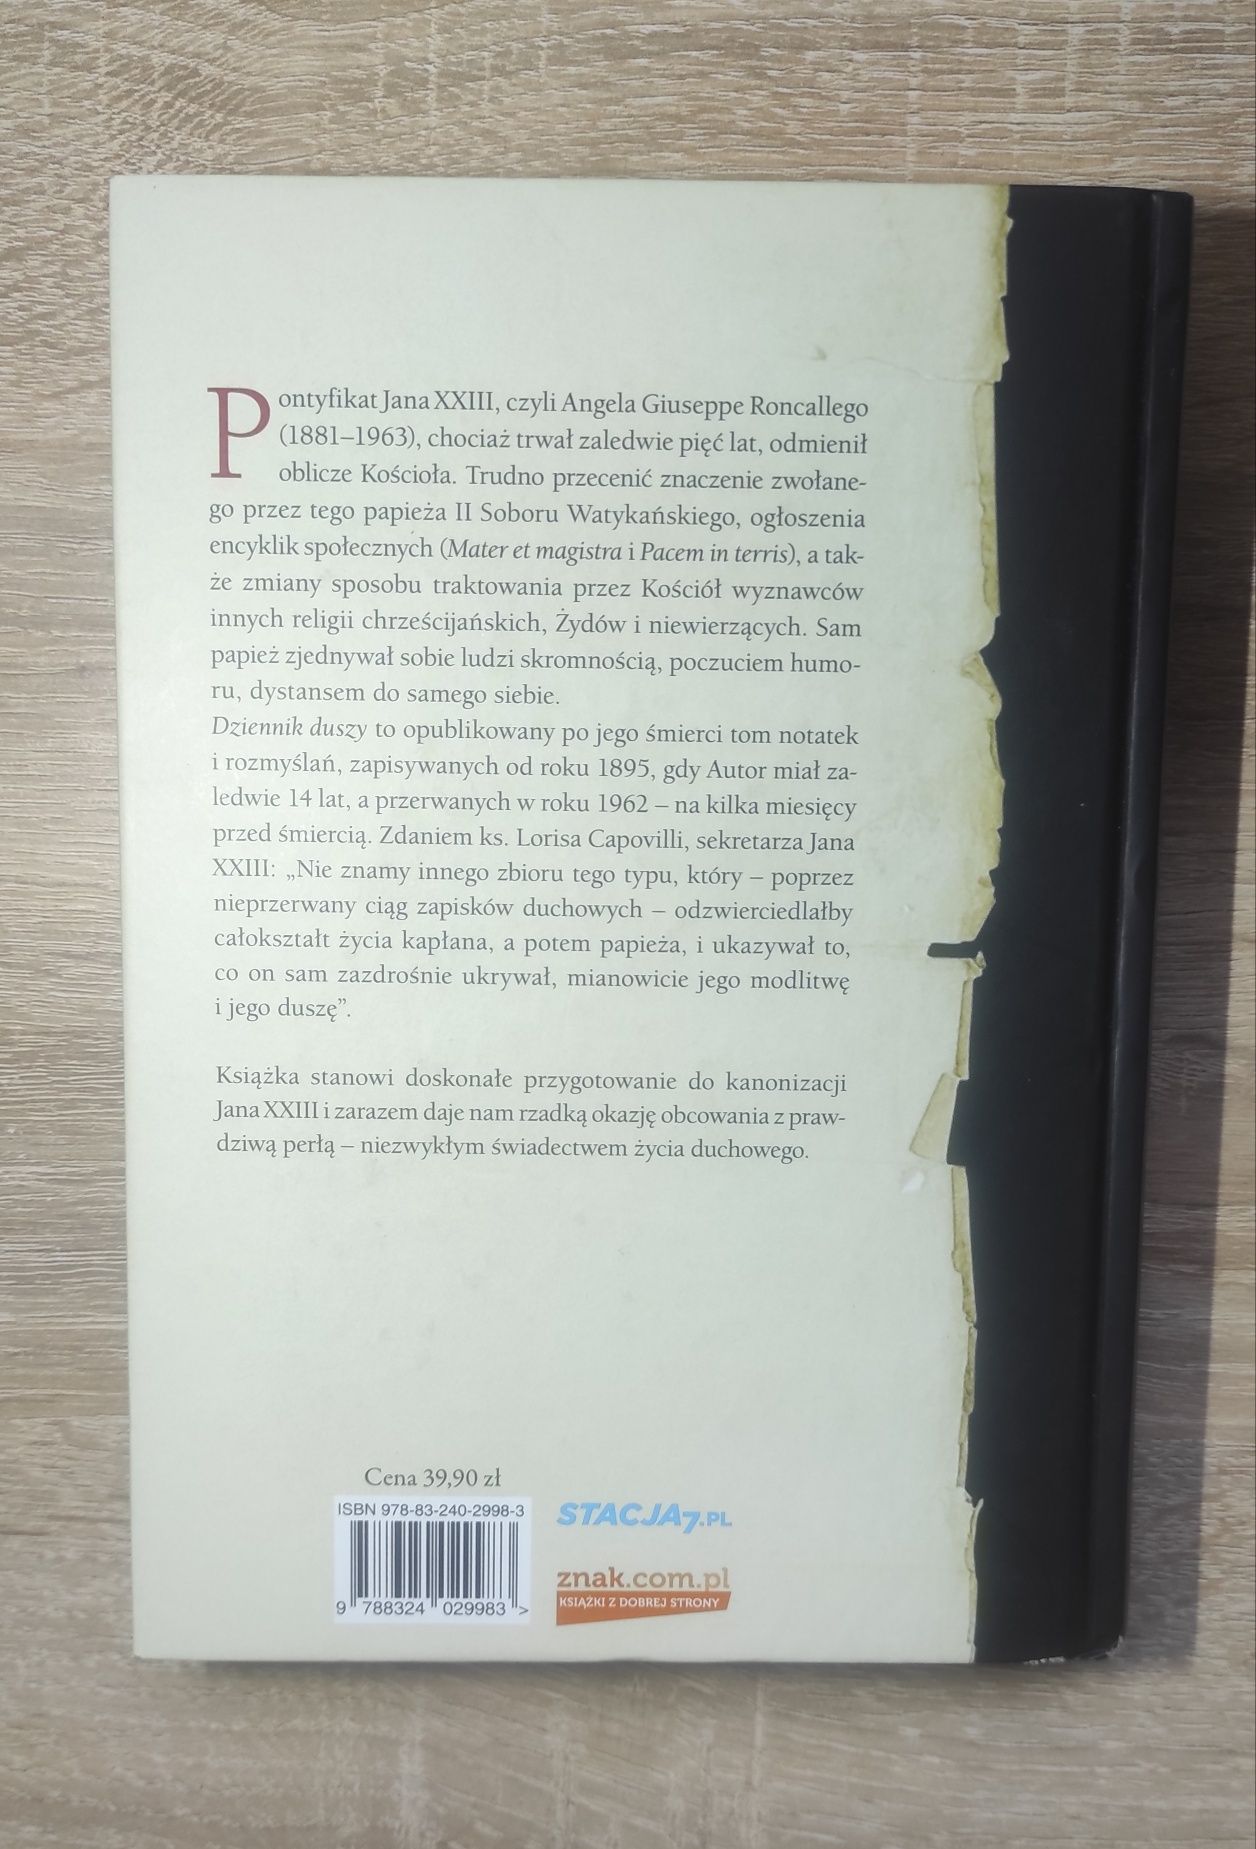 Książka '' Dziennik Duszy''